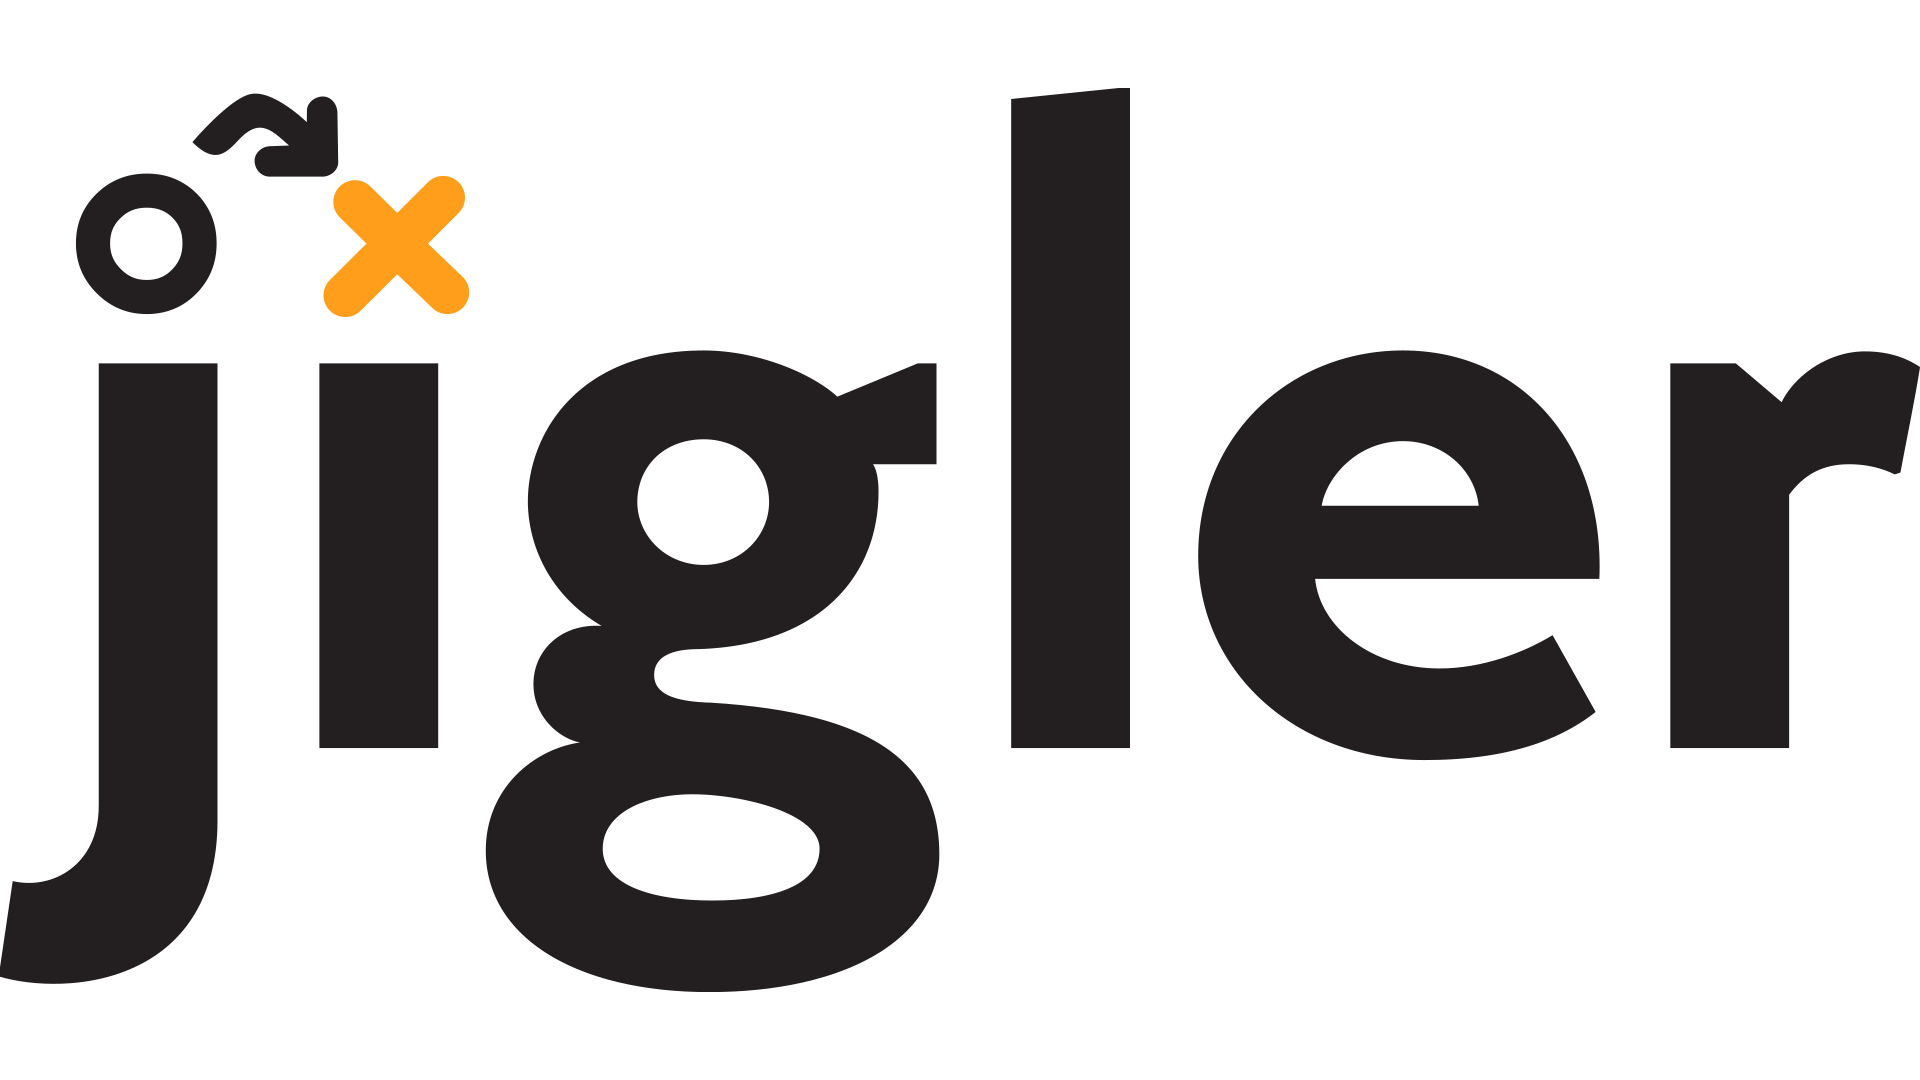 Jigler-logo